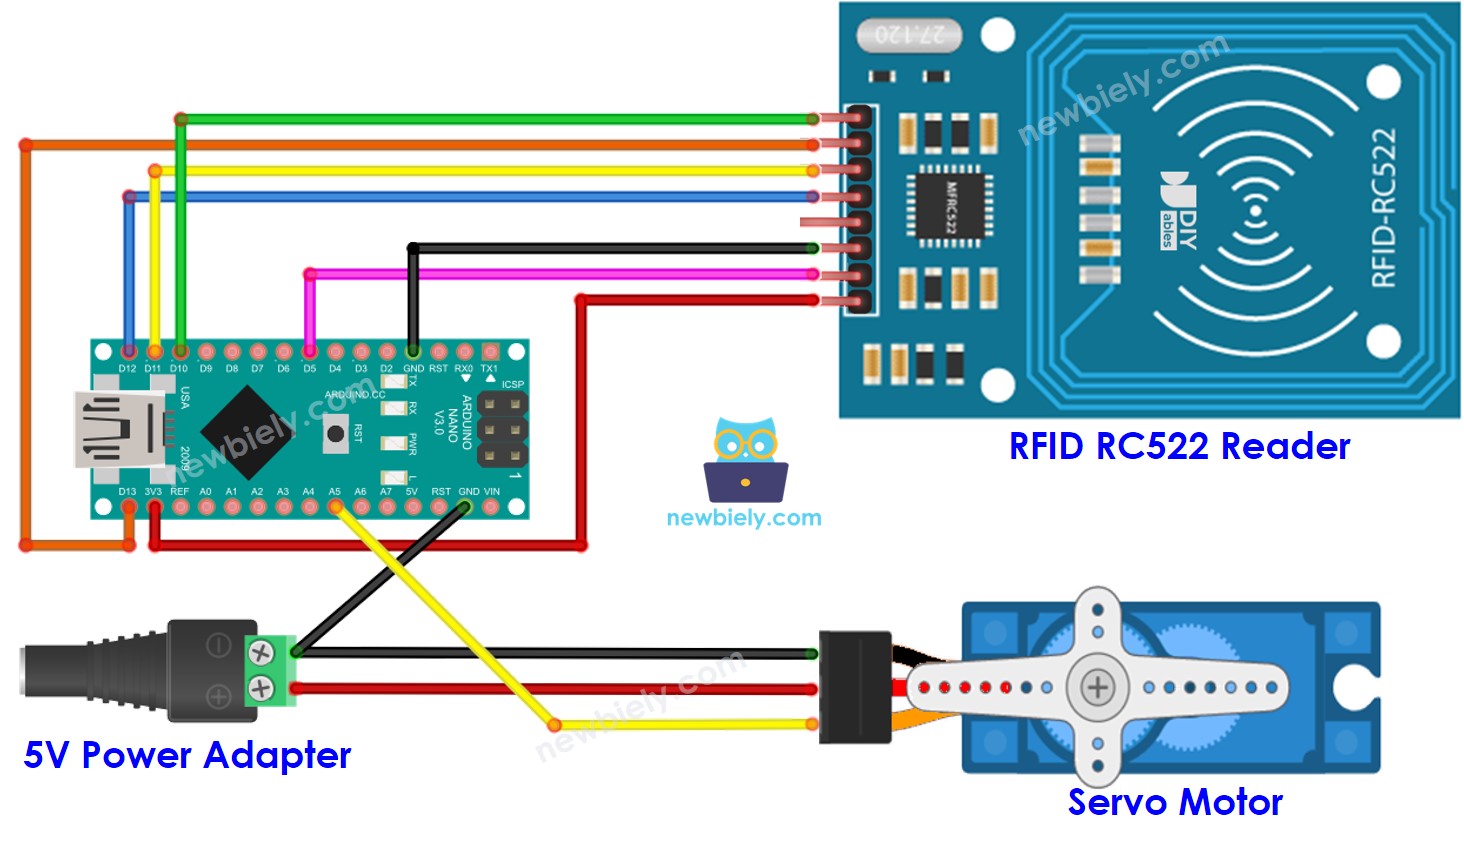 The wiring diagram between Arduino Nano and RFID RC522 servo motor